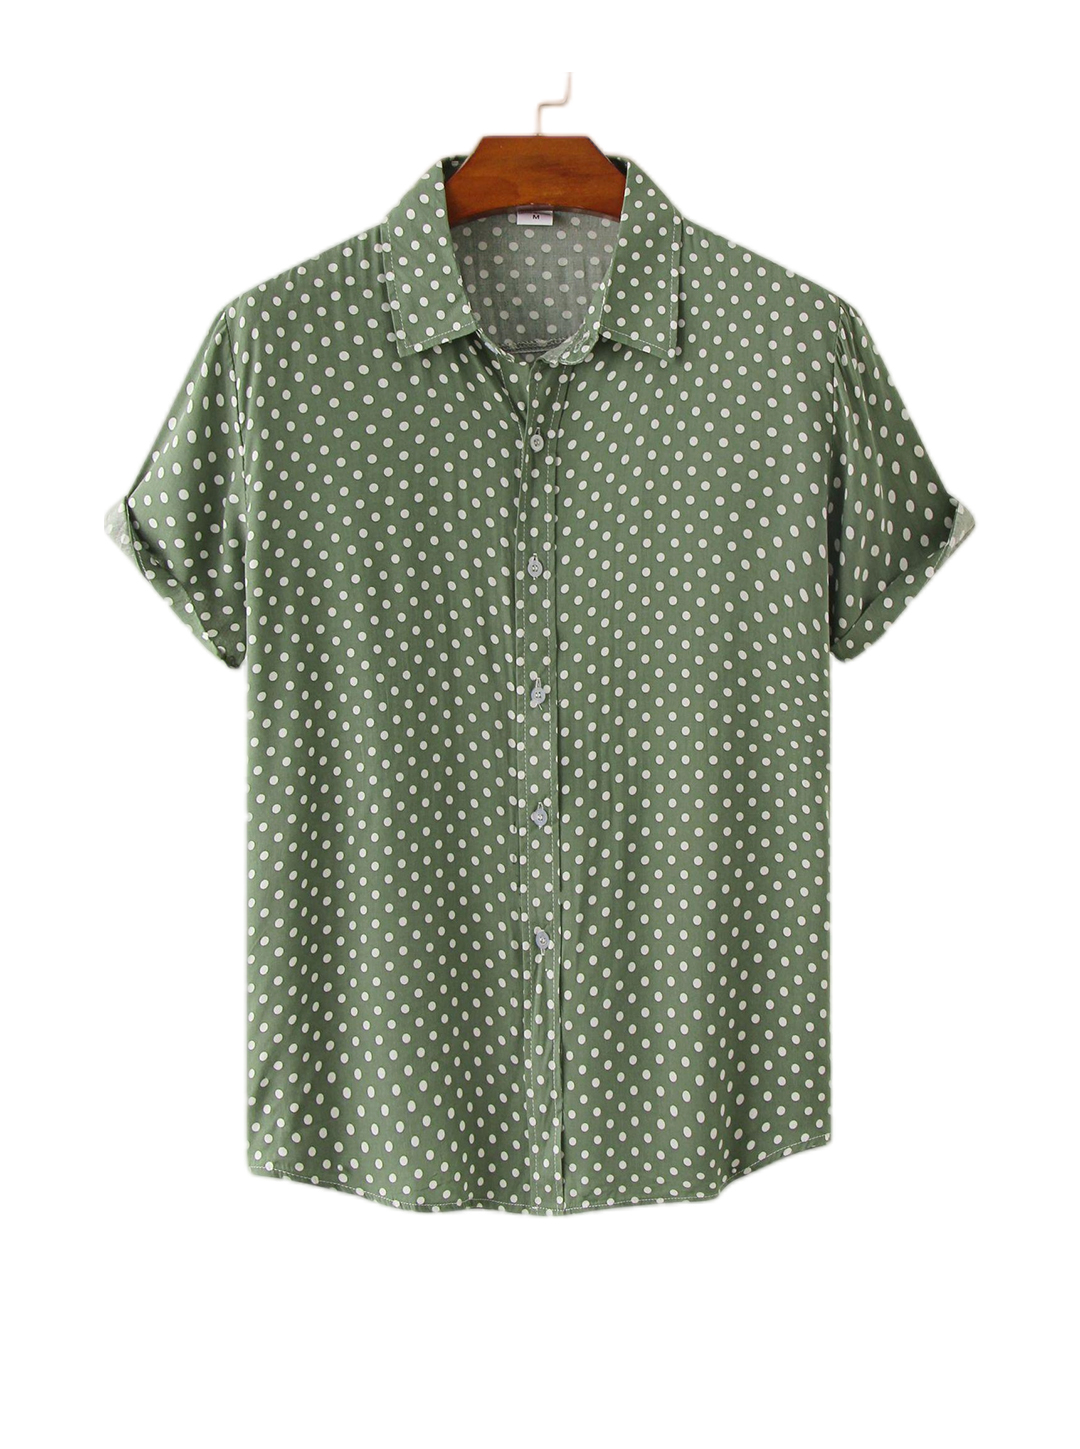 Men's Polka Dot Retro Printed Short-sleeved Shirt-poisonstreetwear.com